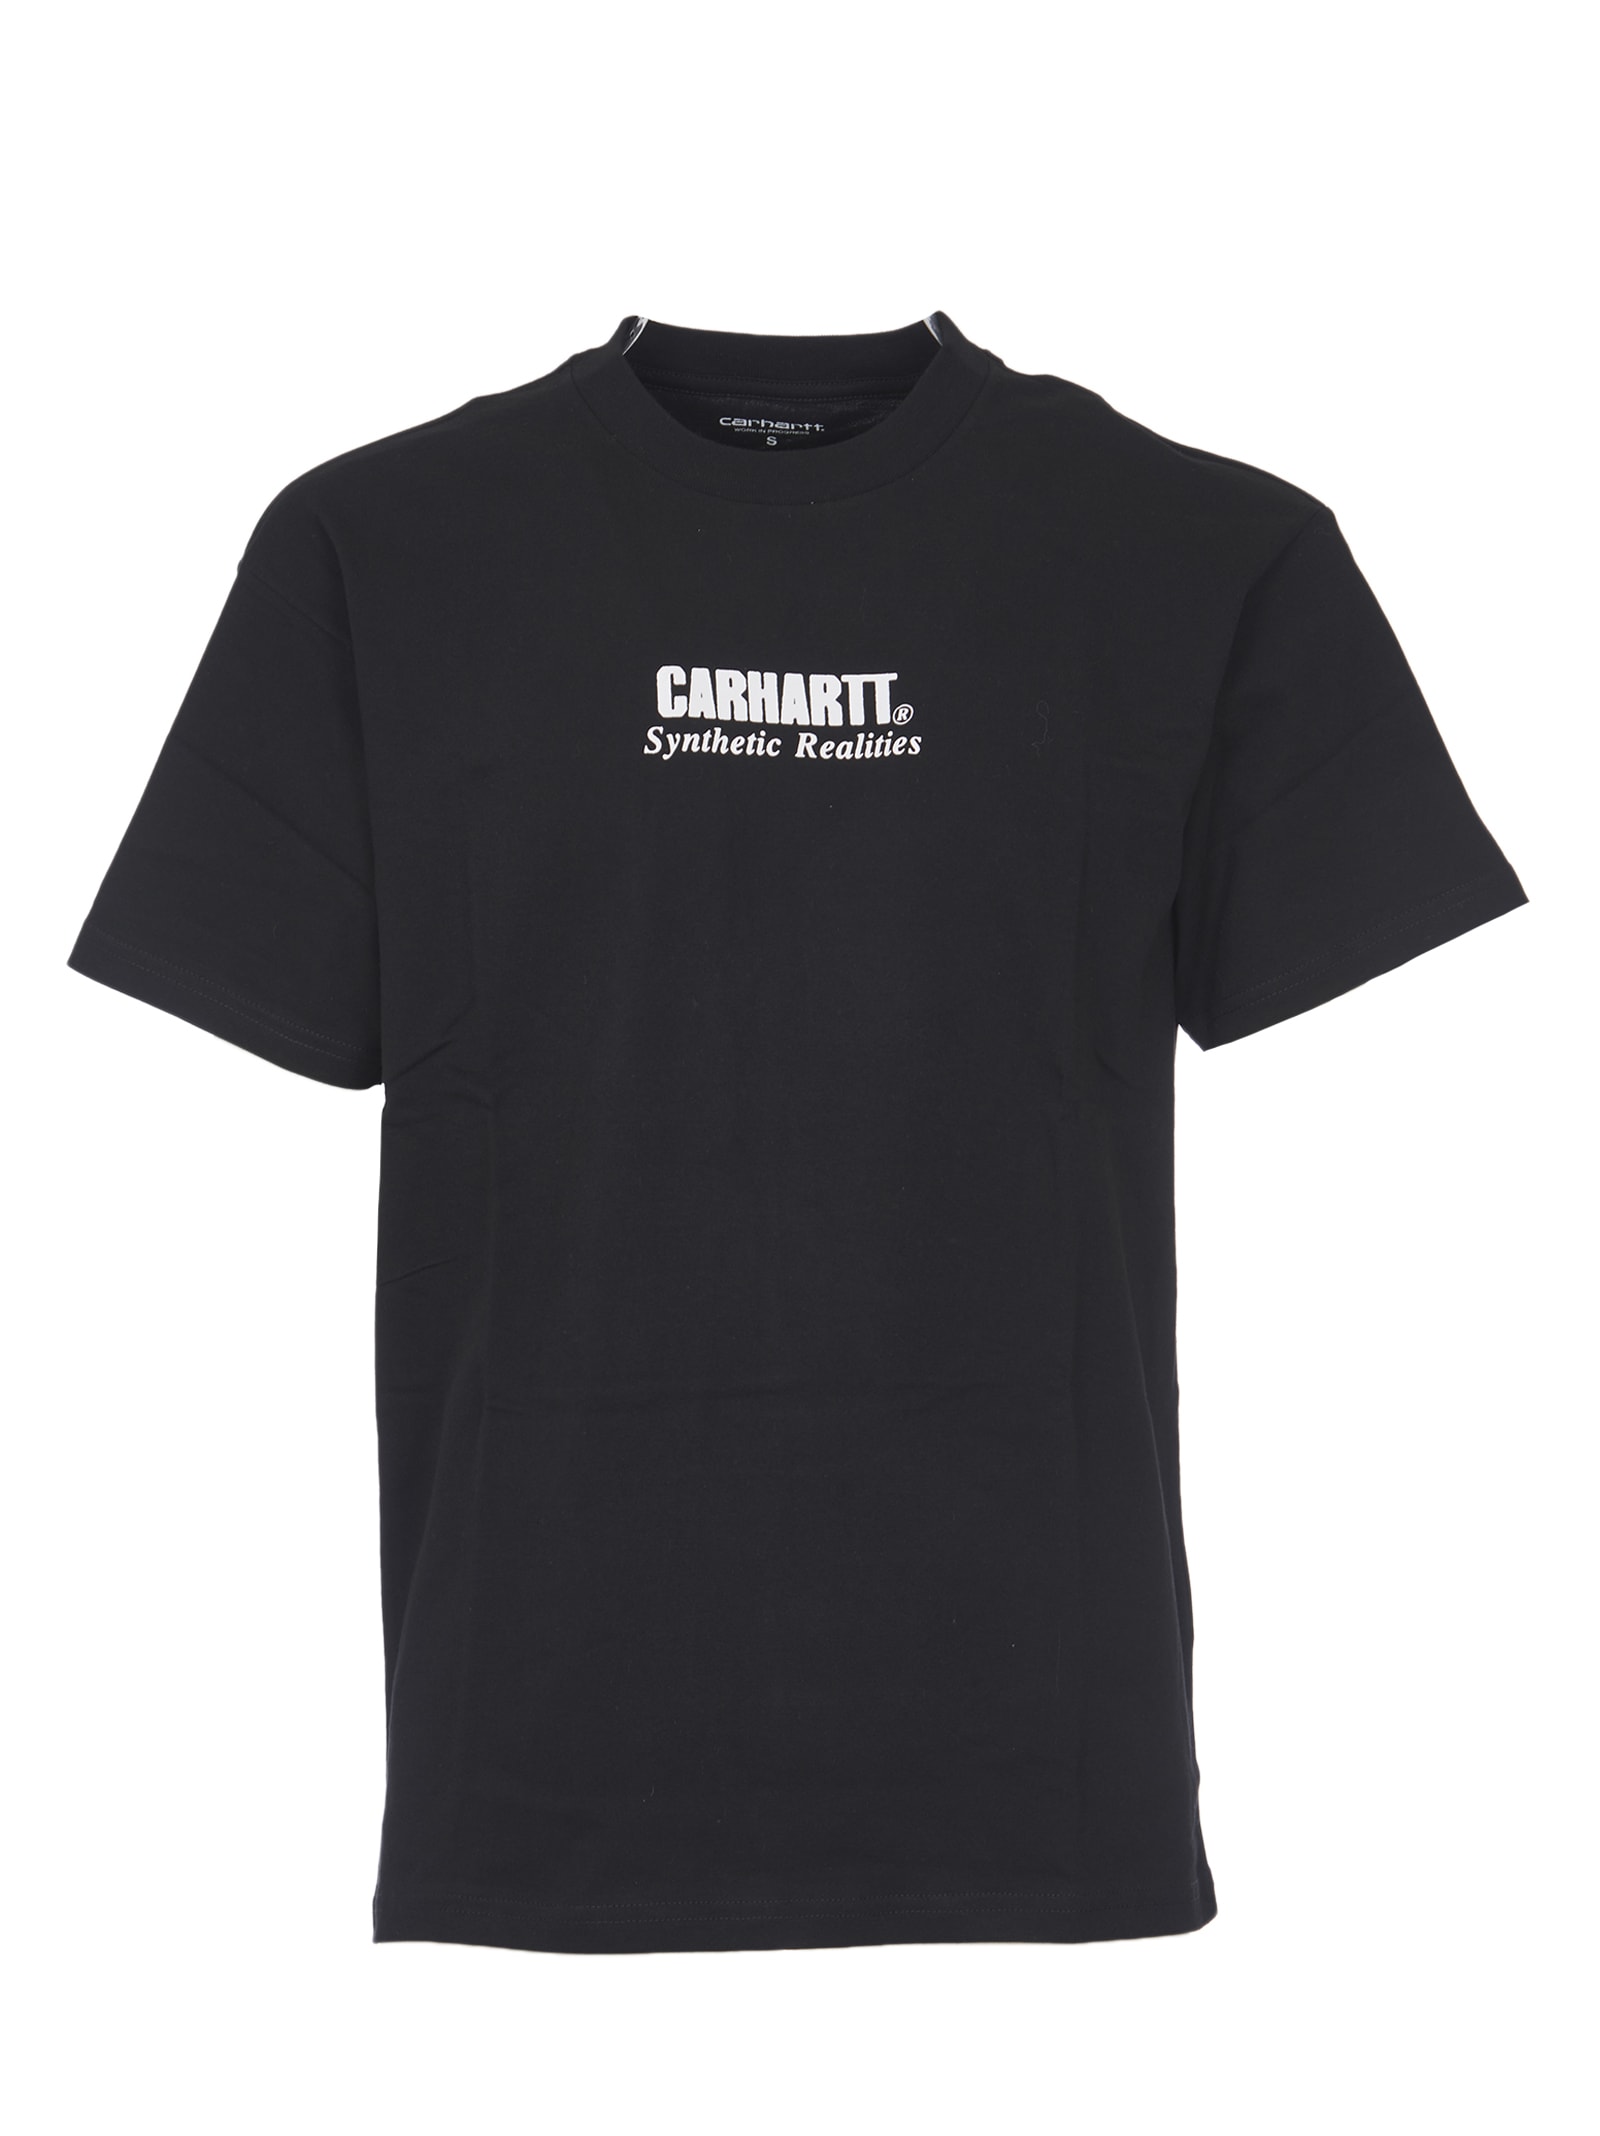 Carhartt Synthetic Realities T-shirt